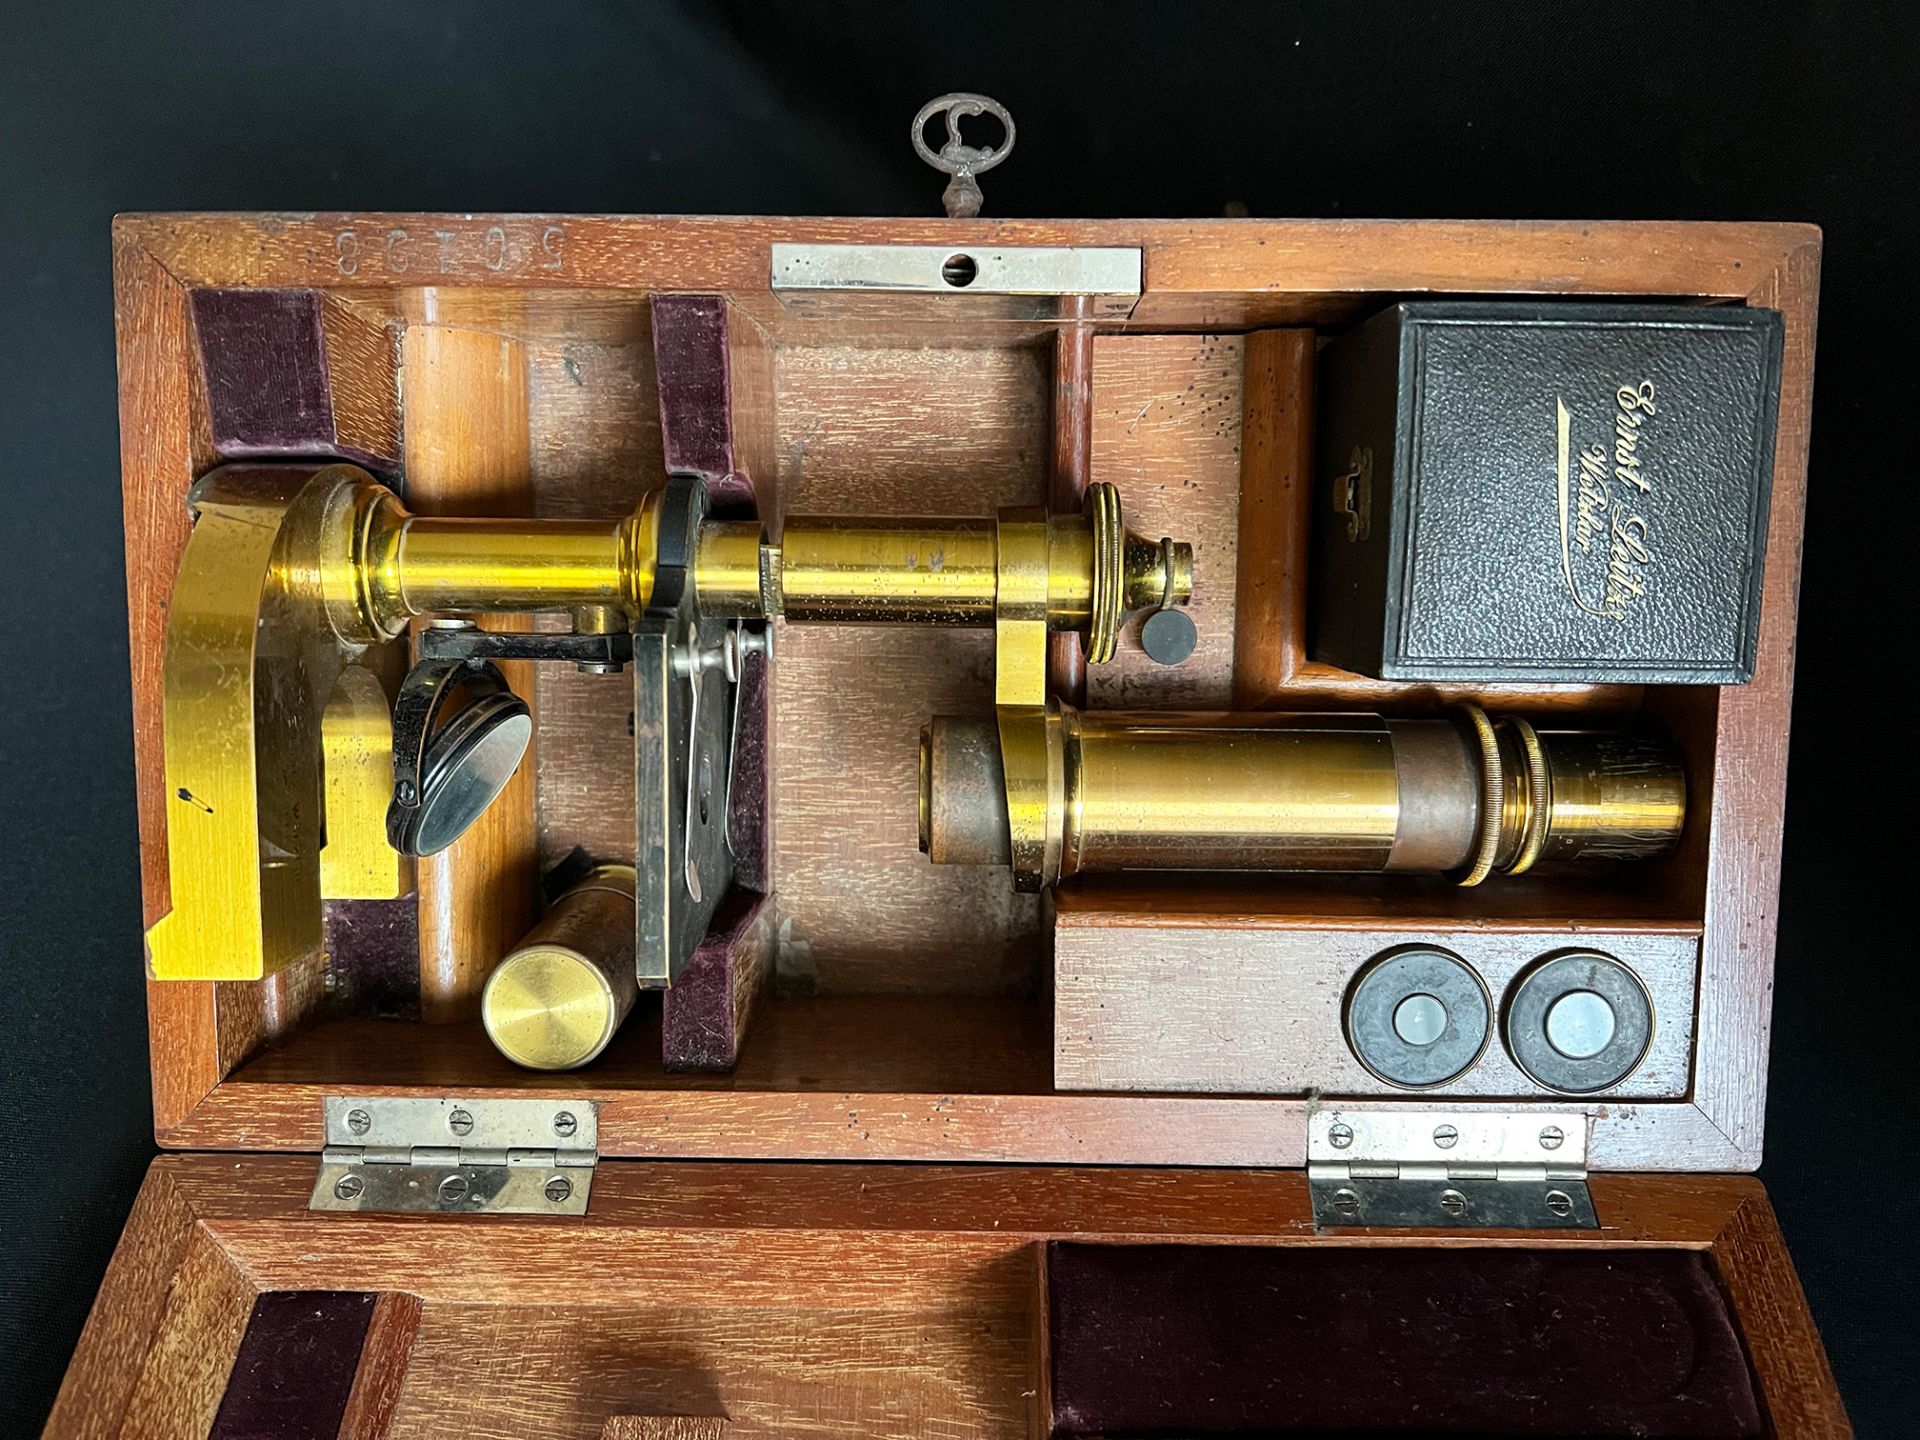 Messing-Mikroskop "E. Leitz, Wetzlar" im Holzkasten, um 1900. Signiert auf Hufeisenfuß, Serien-Nr. - Image 8 of 11